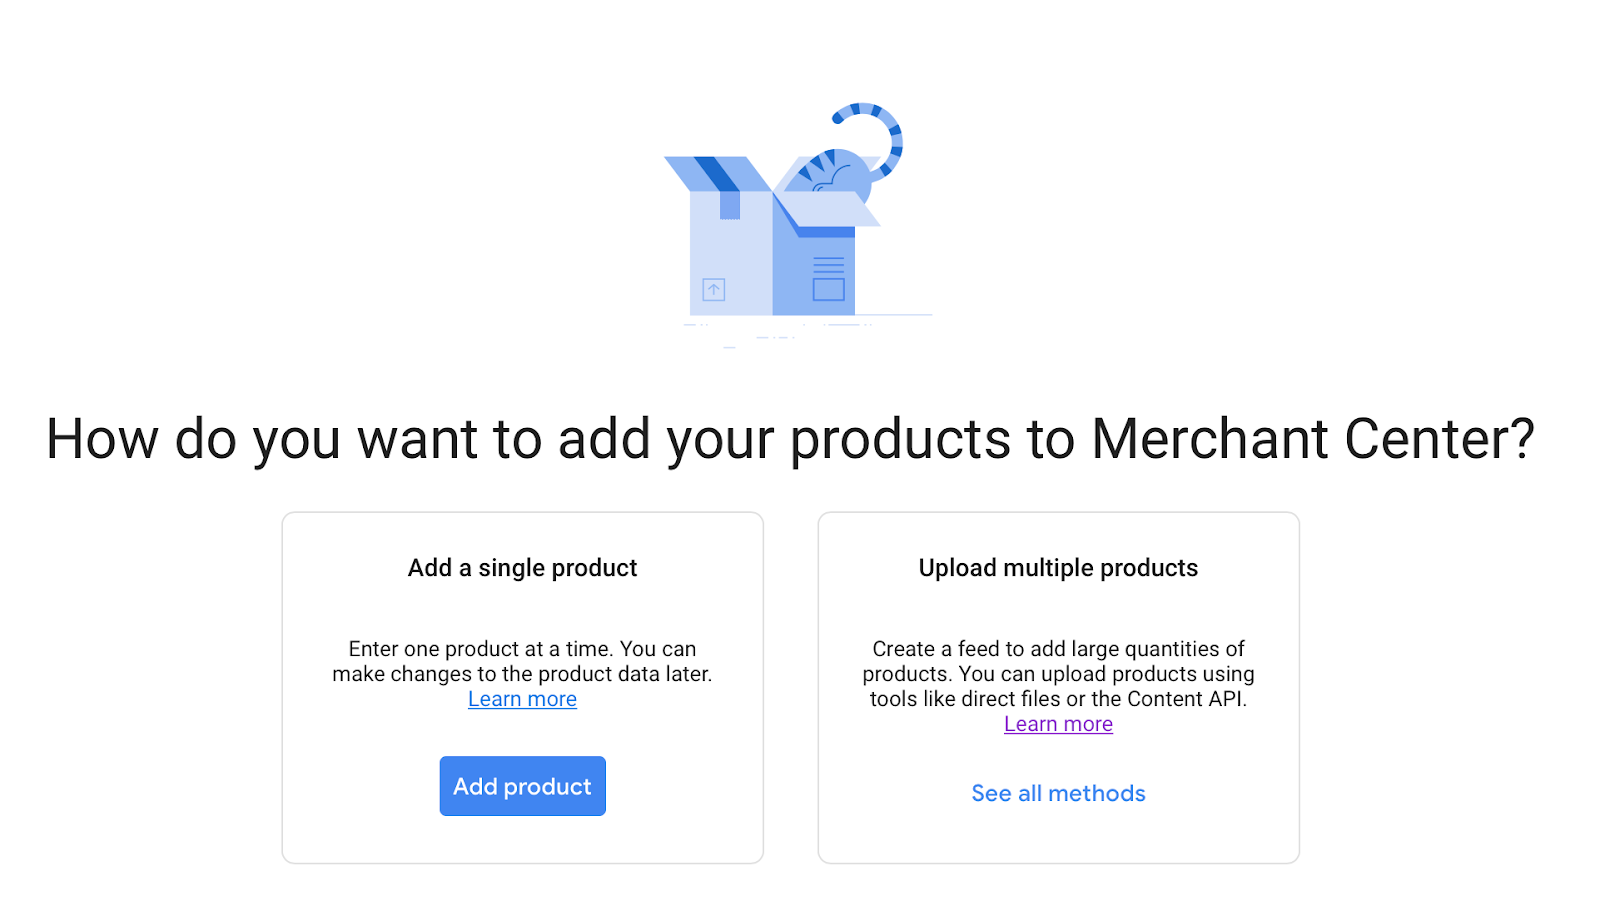 Google Merchant Center account set up product listings 